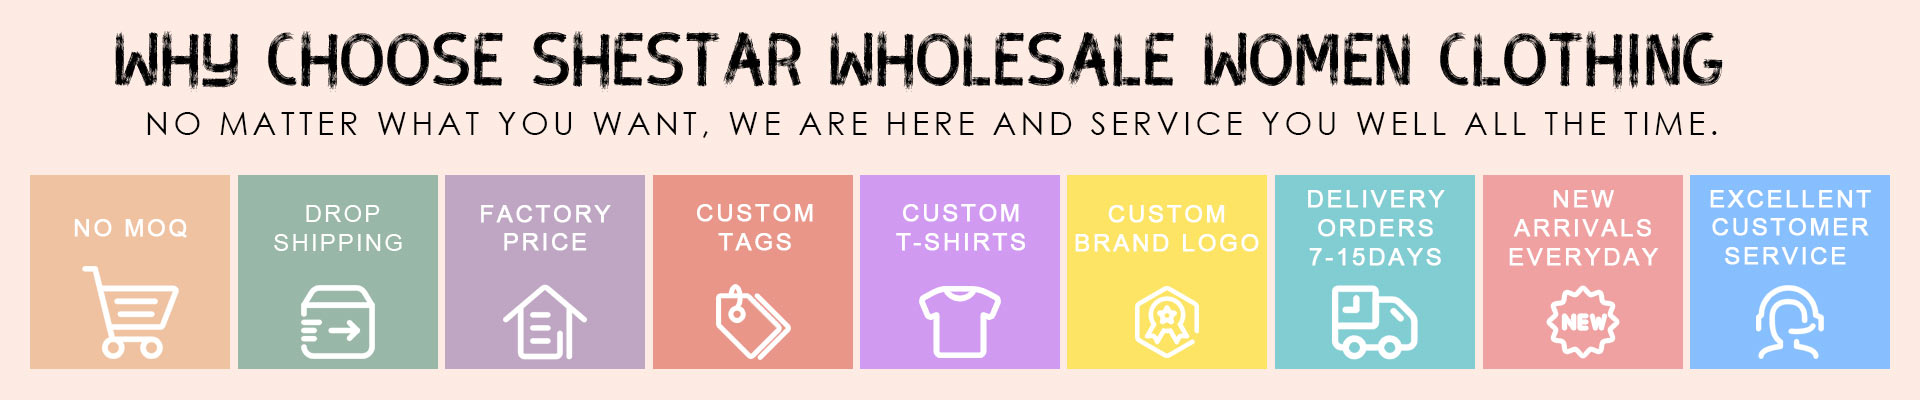 wholesale clothing distributors